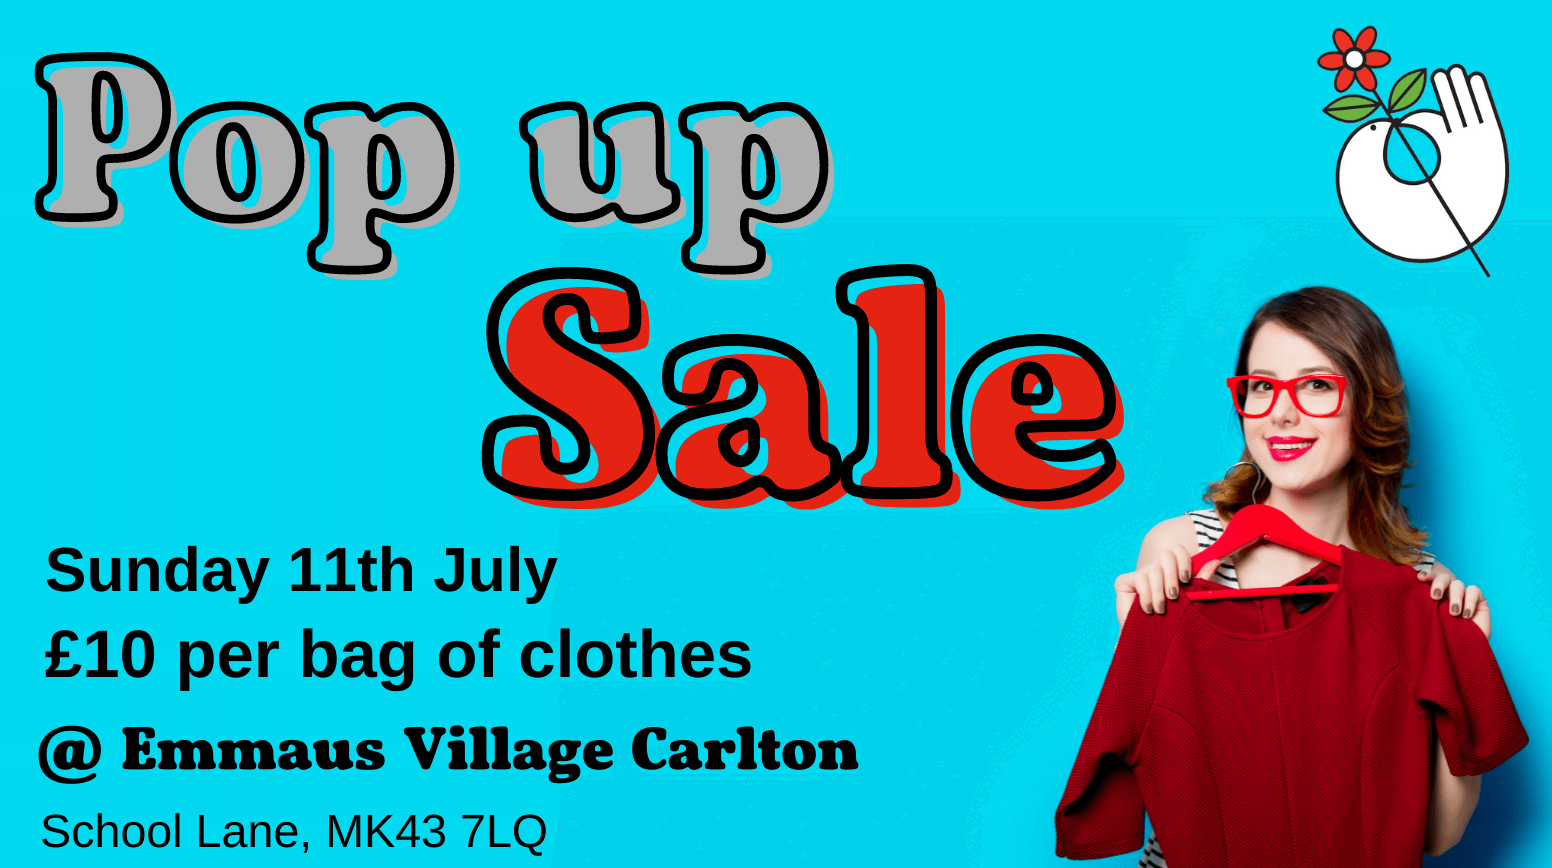 Pop Up Clothes Sale this Sunday 11th July - Emmaus Village Carlton